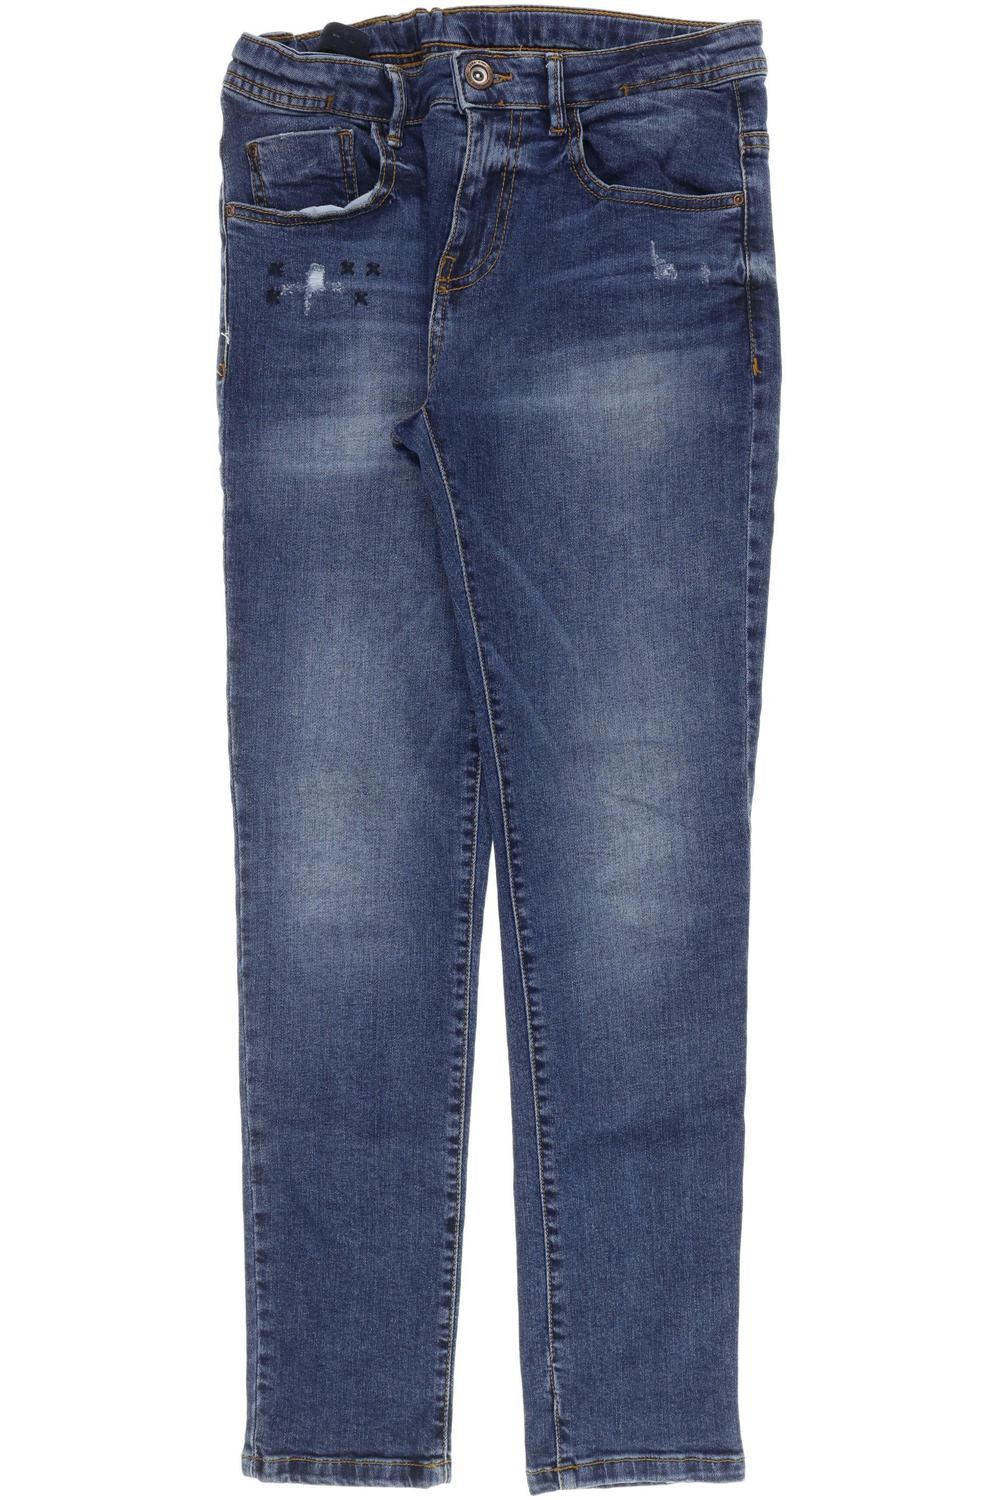 ZARA Jungen Jeans DE 152 Second Hand kaufen | ubup